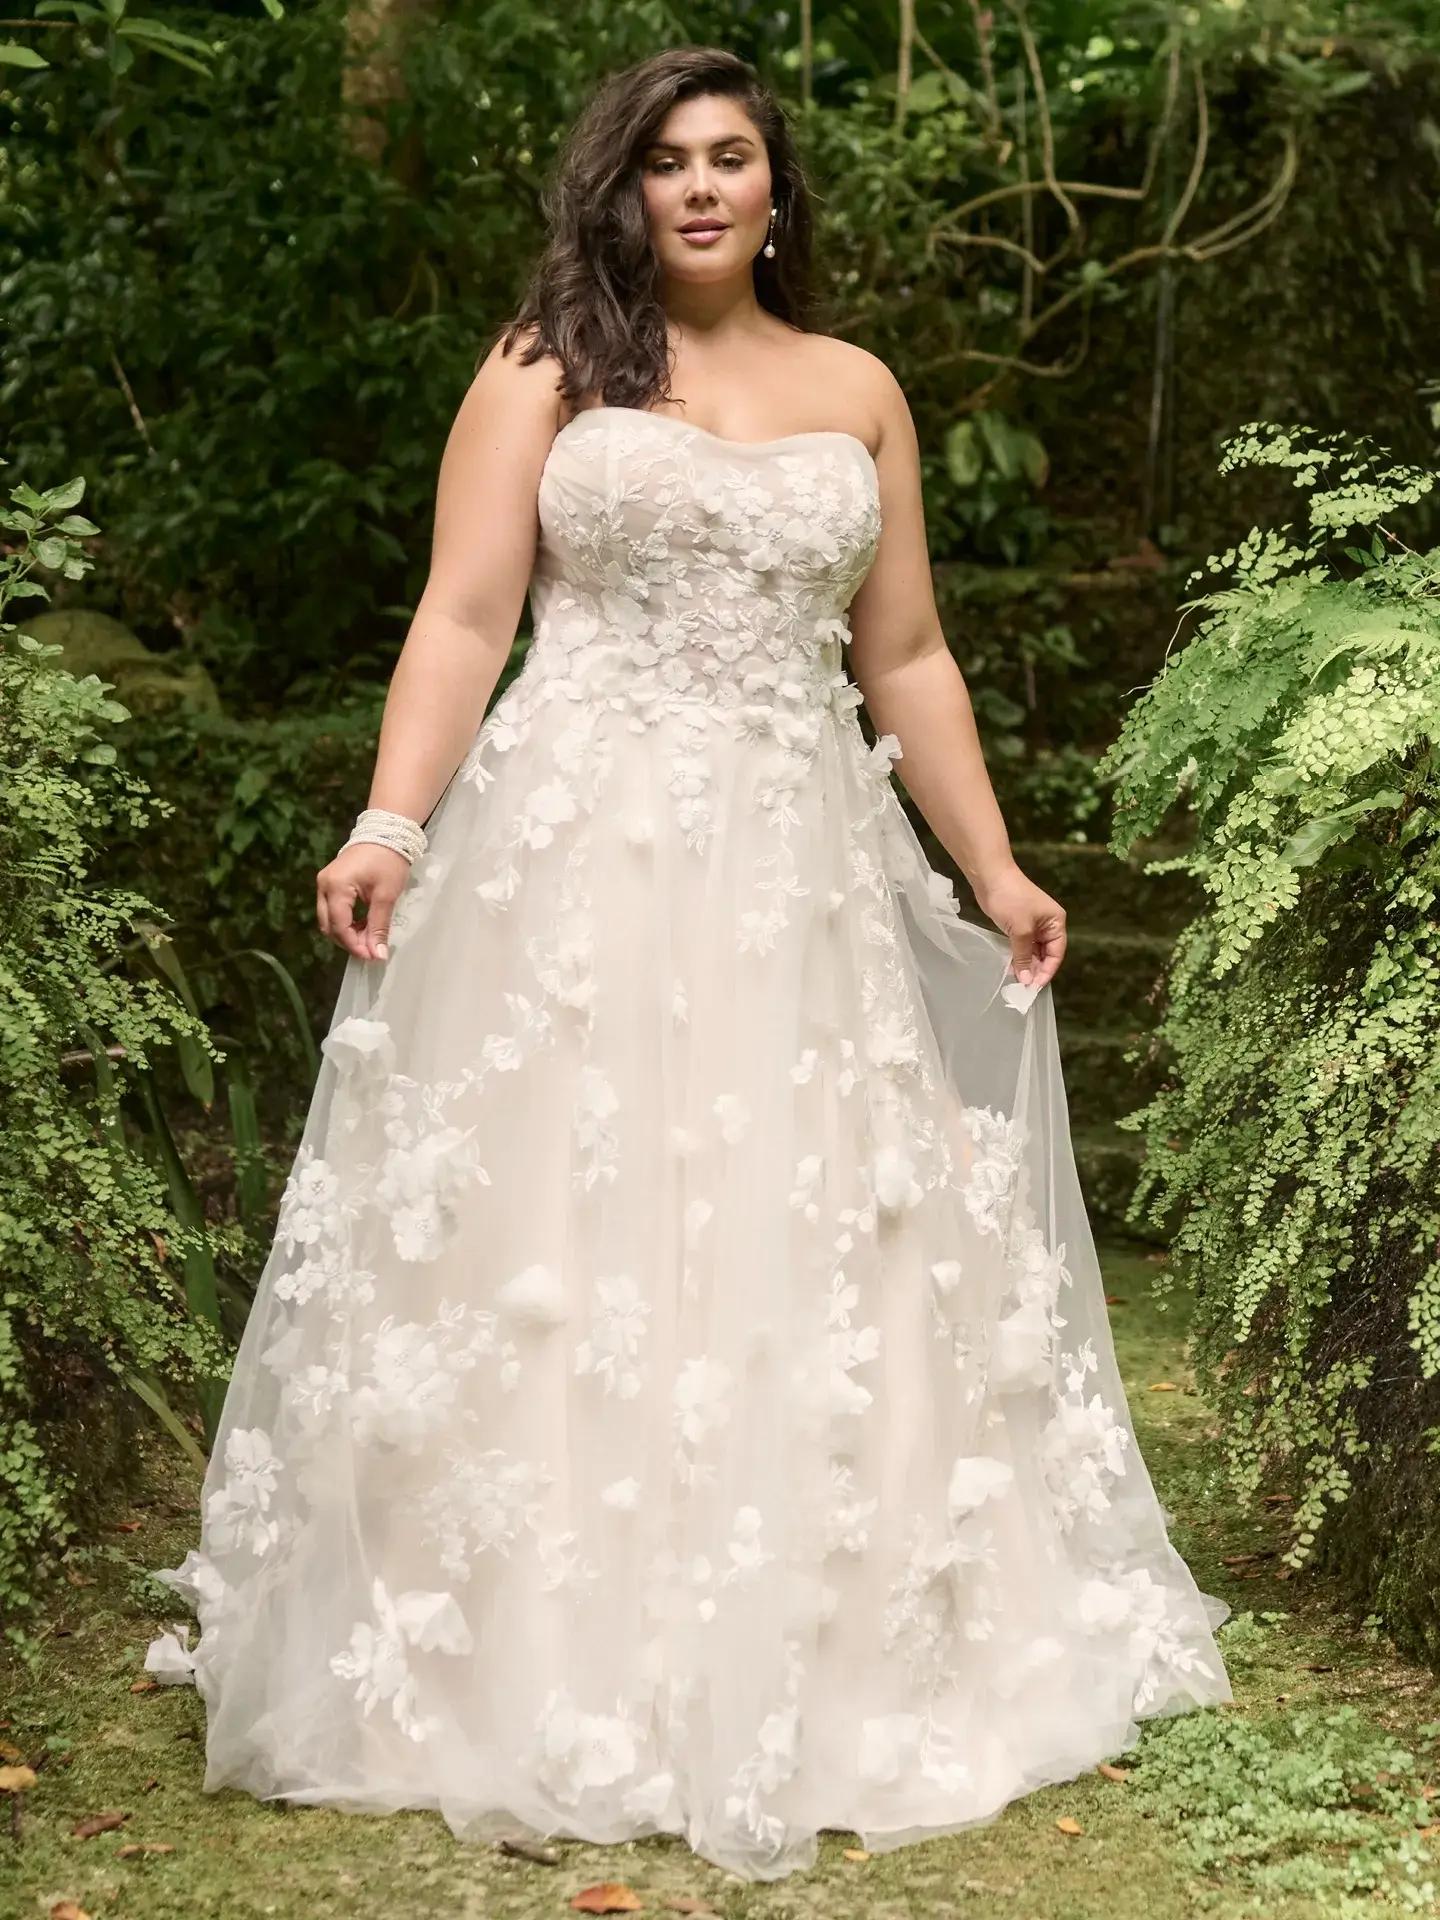 Plus Size Perfection: Finding a Flattering &amp; Fabulous Wedding Dress! Image